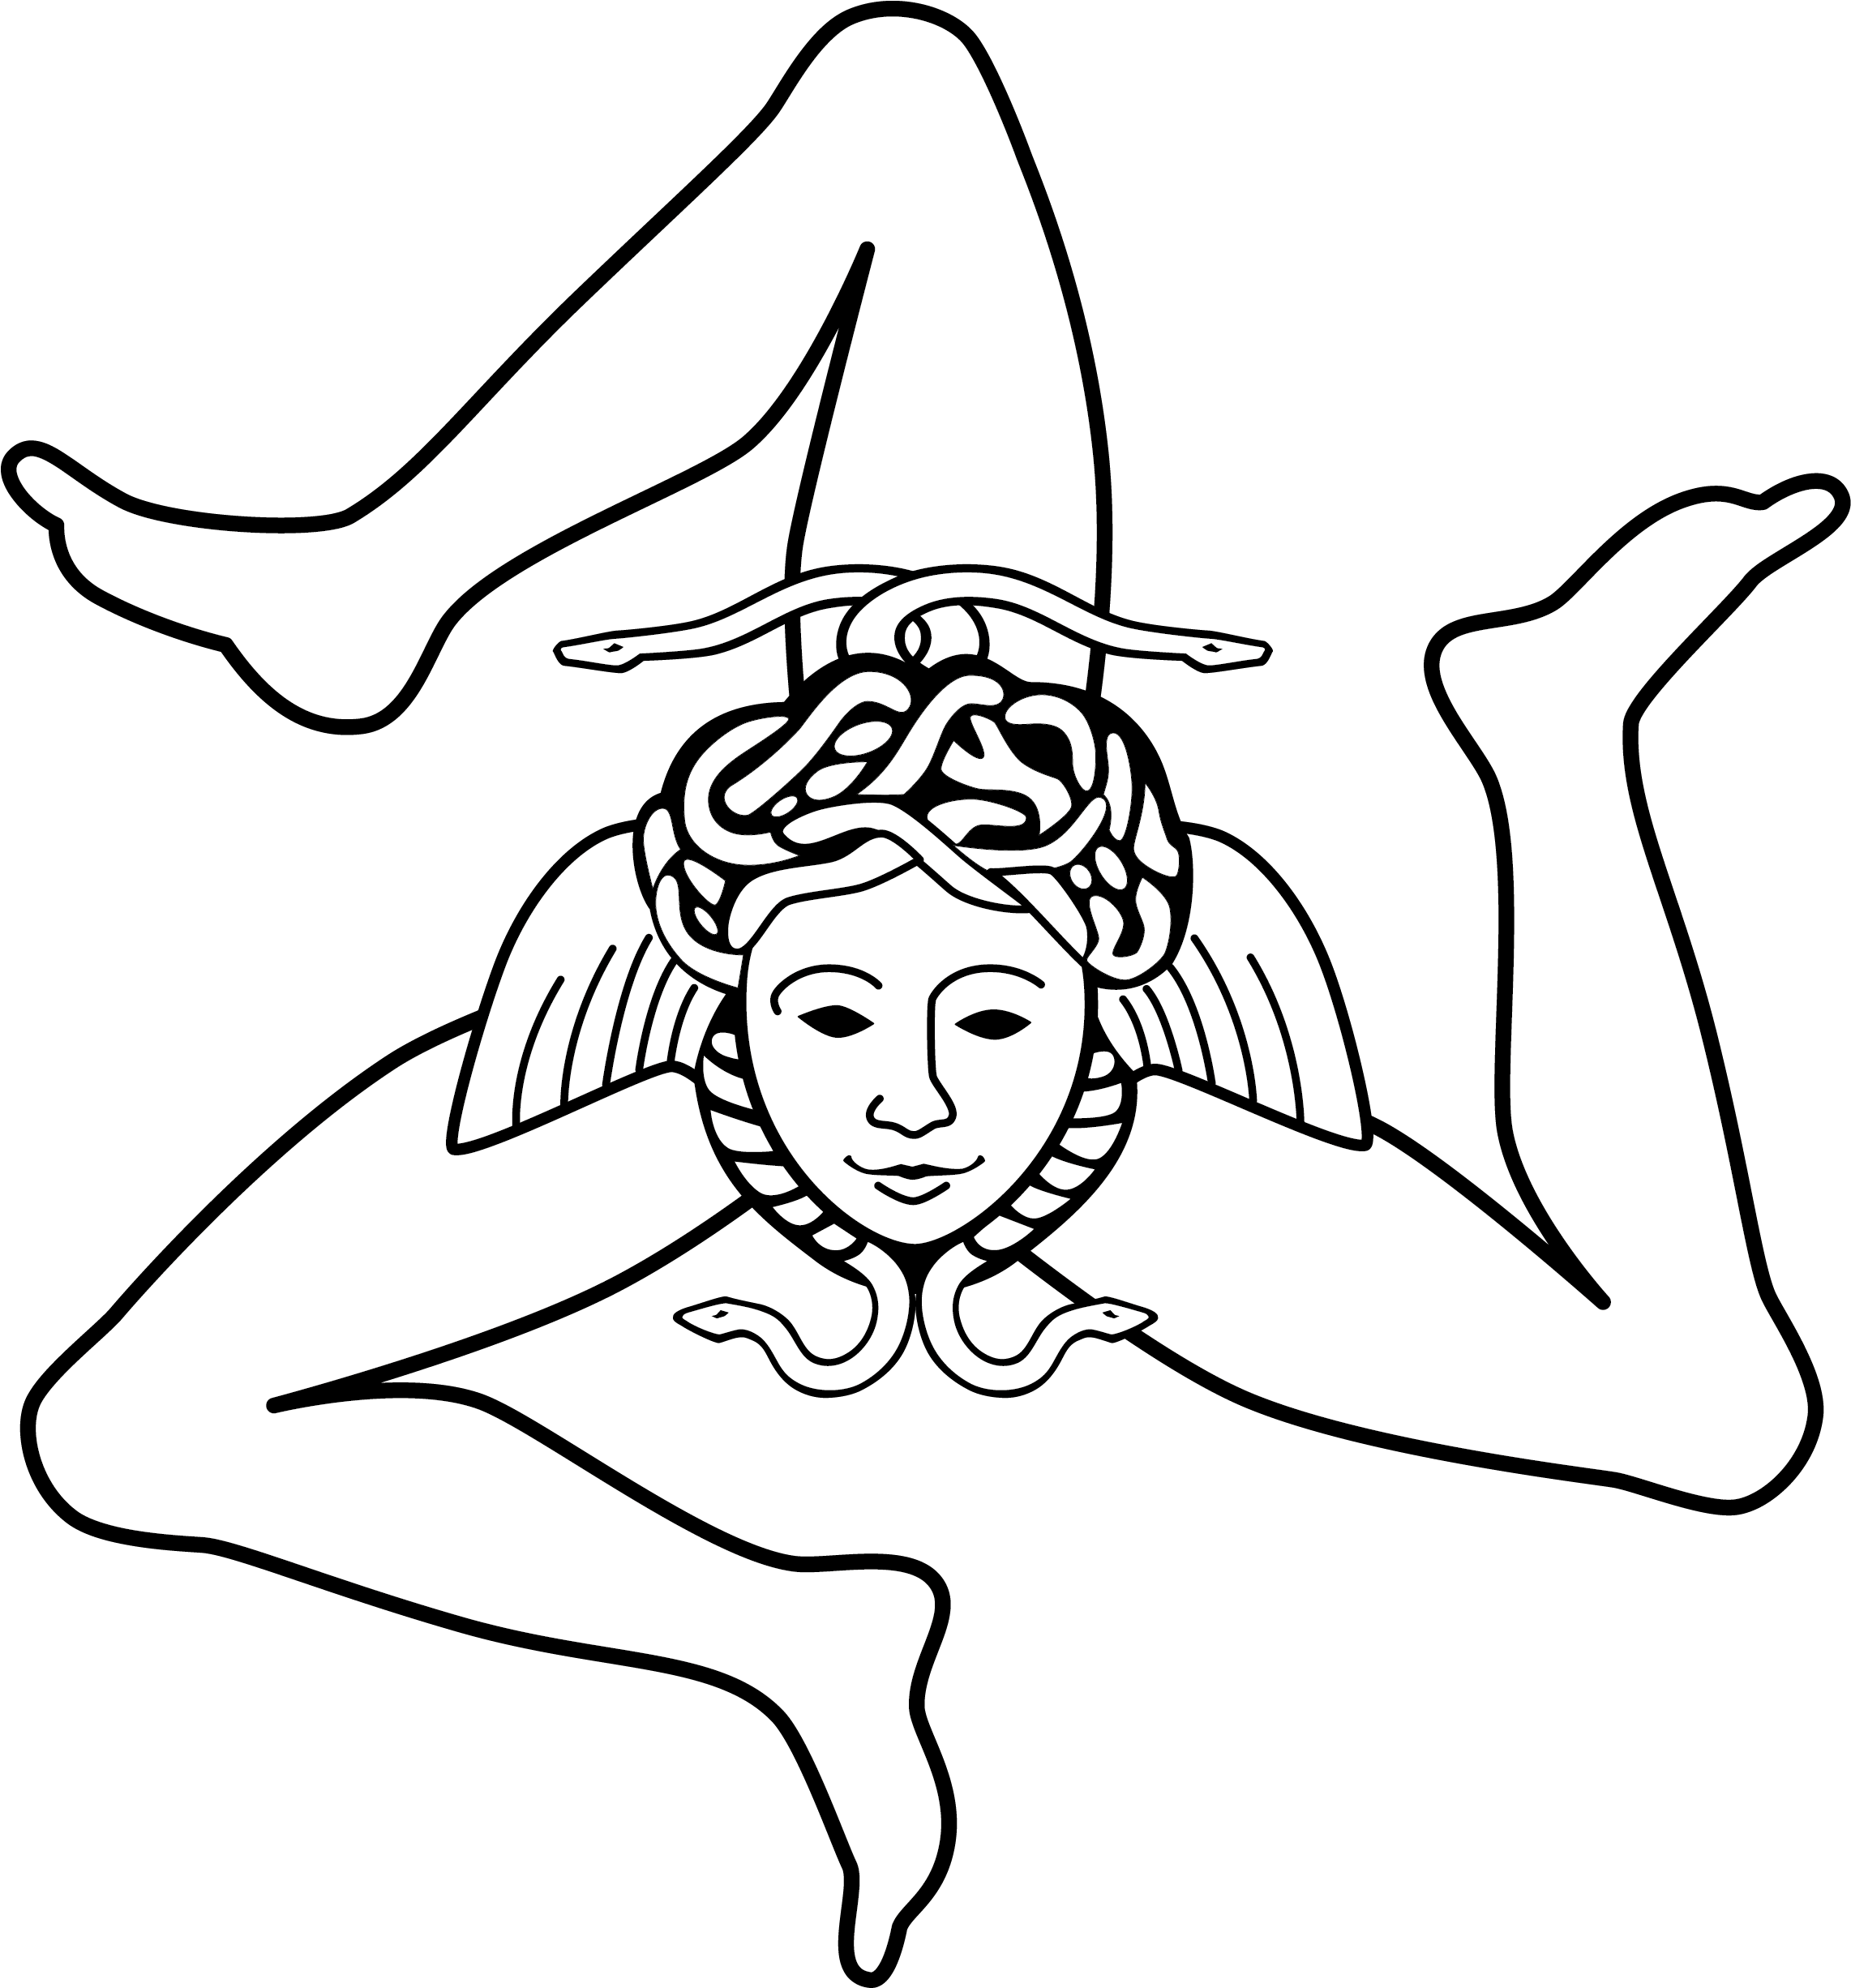 Osteria Siciliana Logo